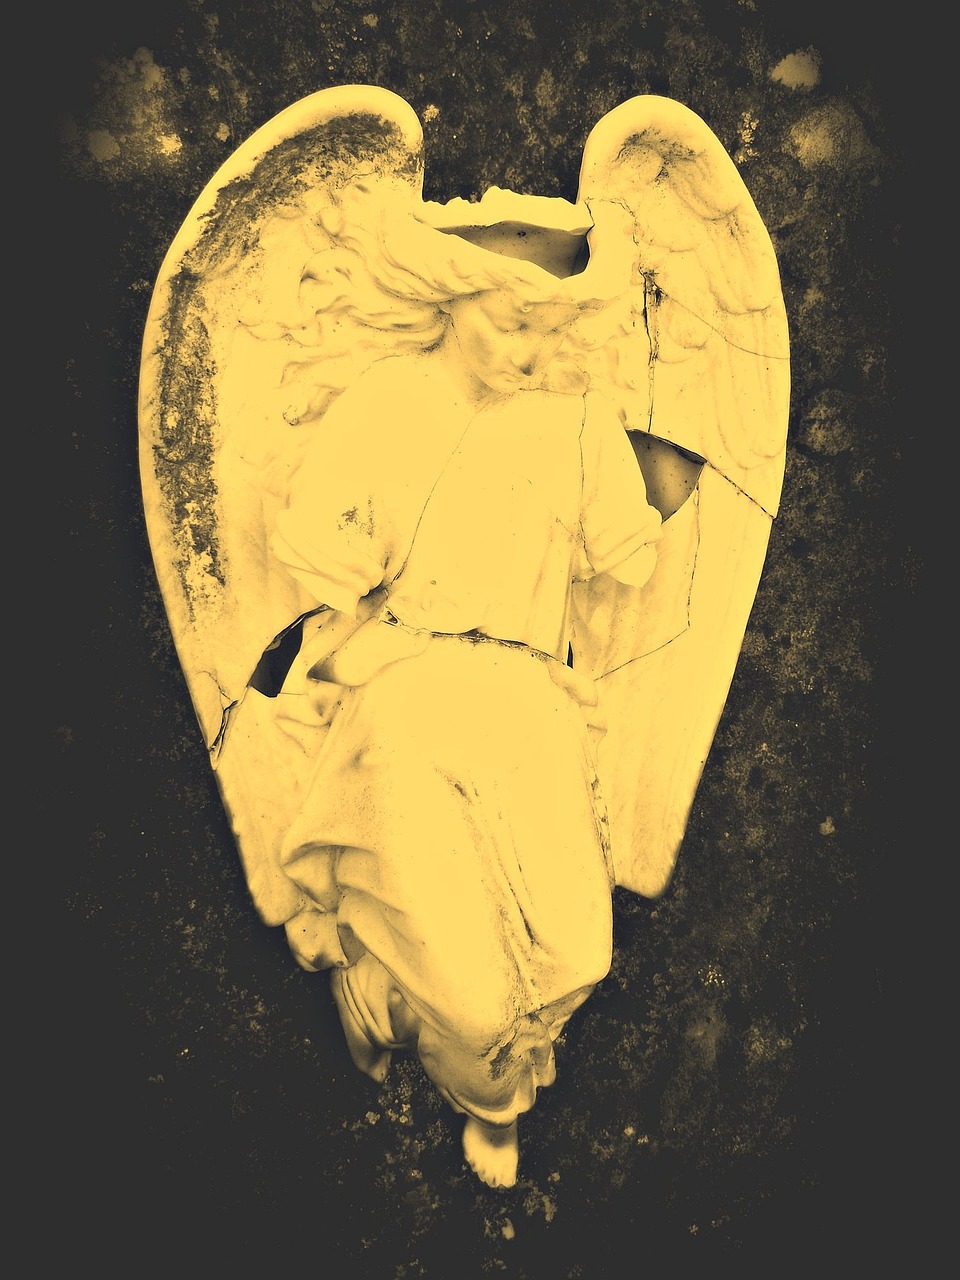 Angel,stone,grave,tombstone,broken - free image from needpix.com